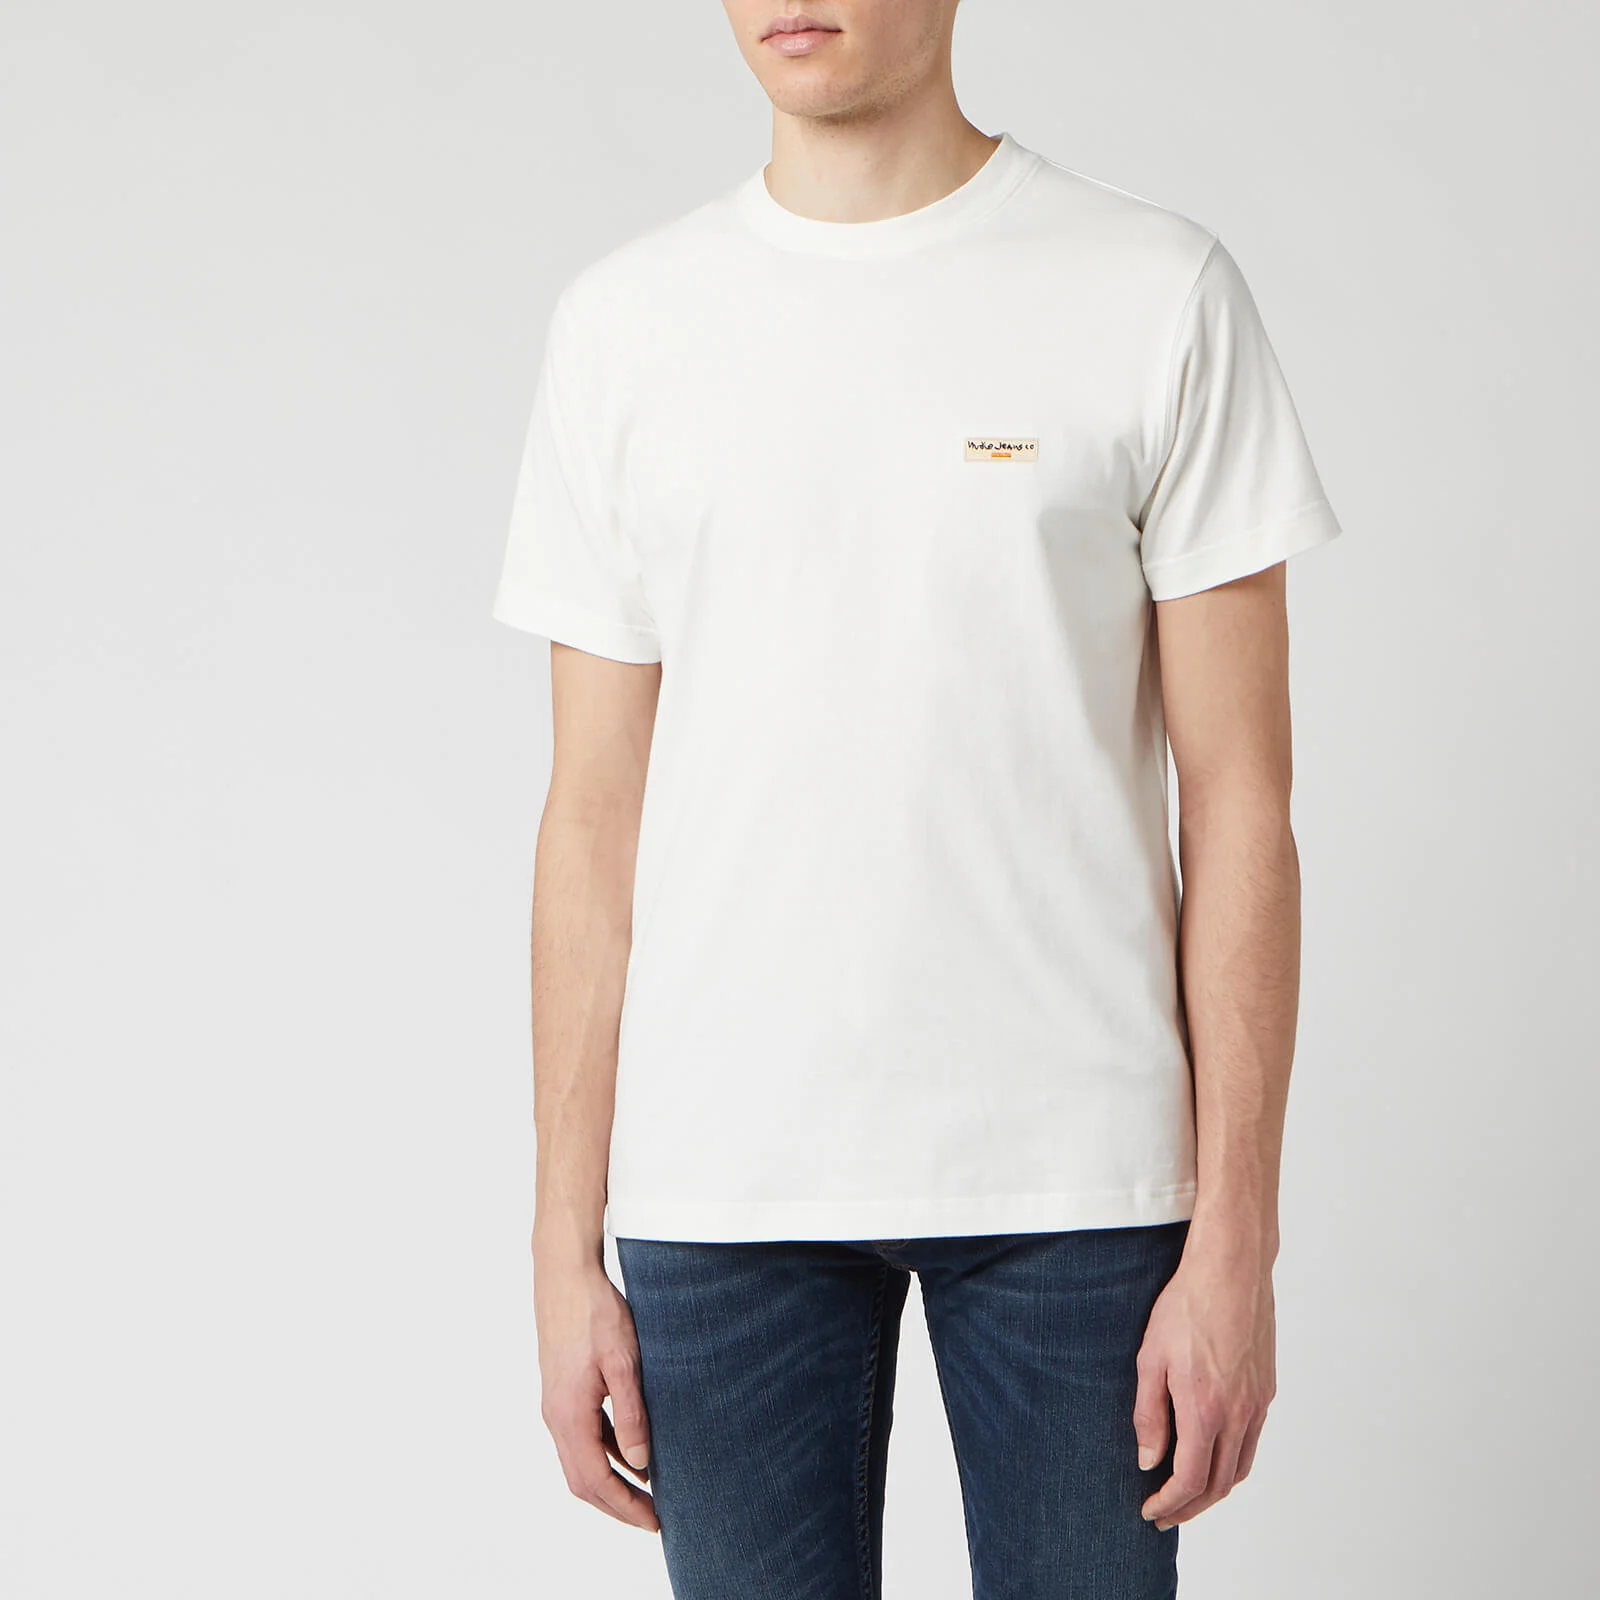 Nudie Jeans Men's Daniel Logo T-Shirt - Off White Image 1